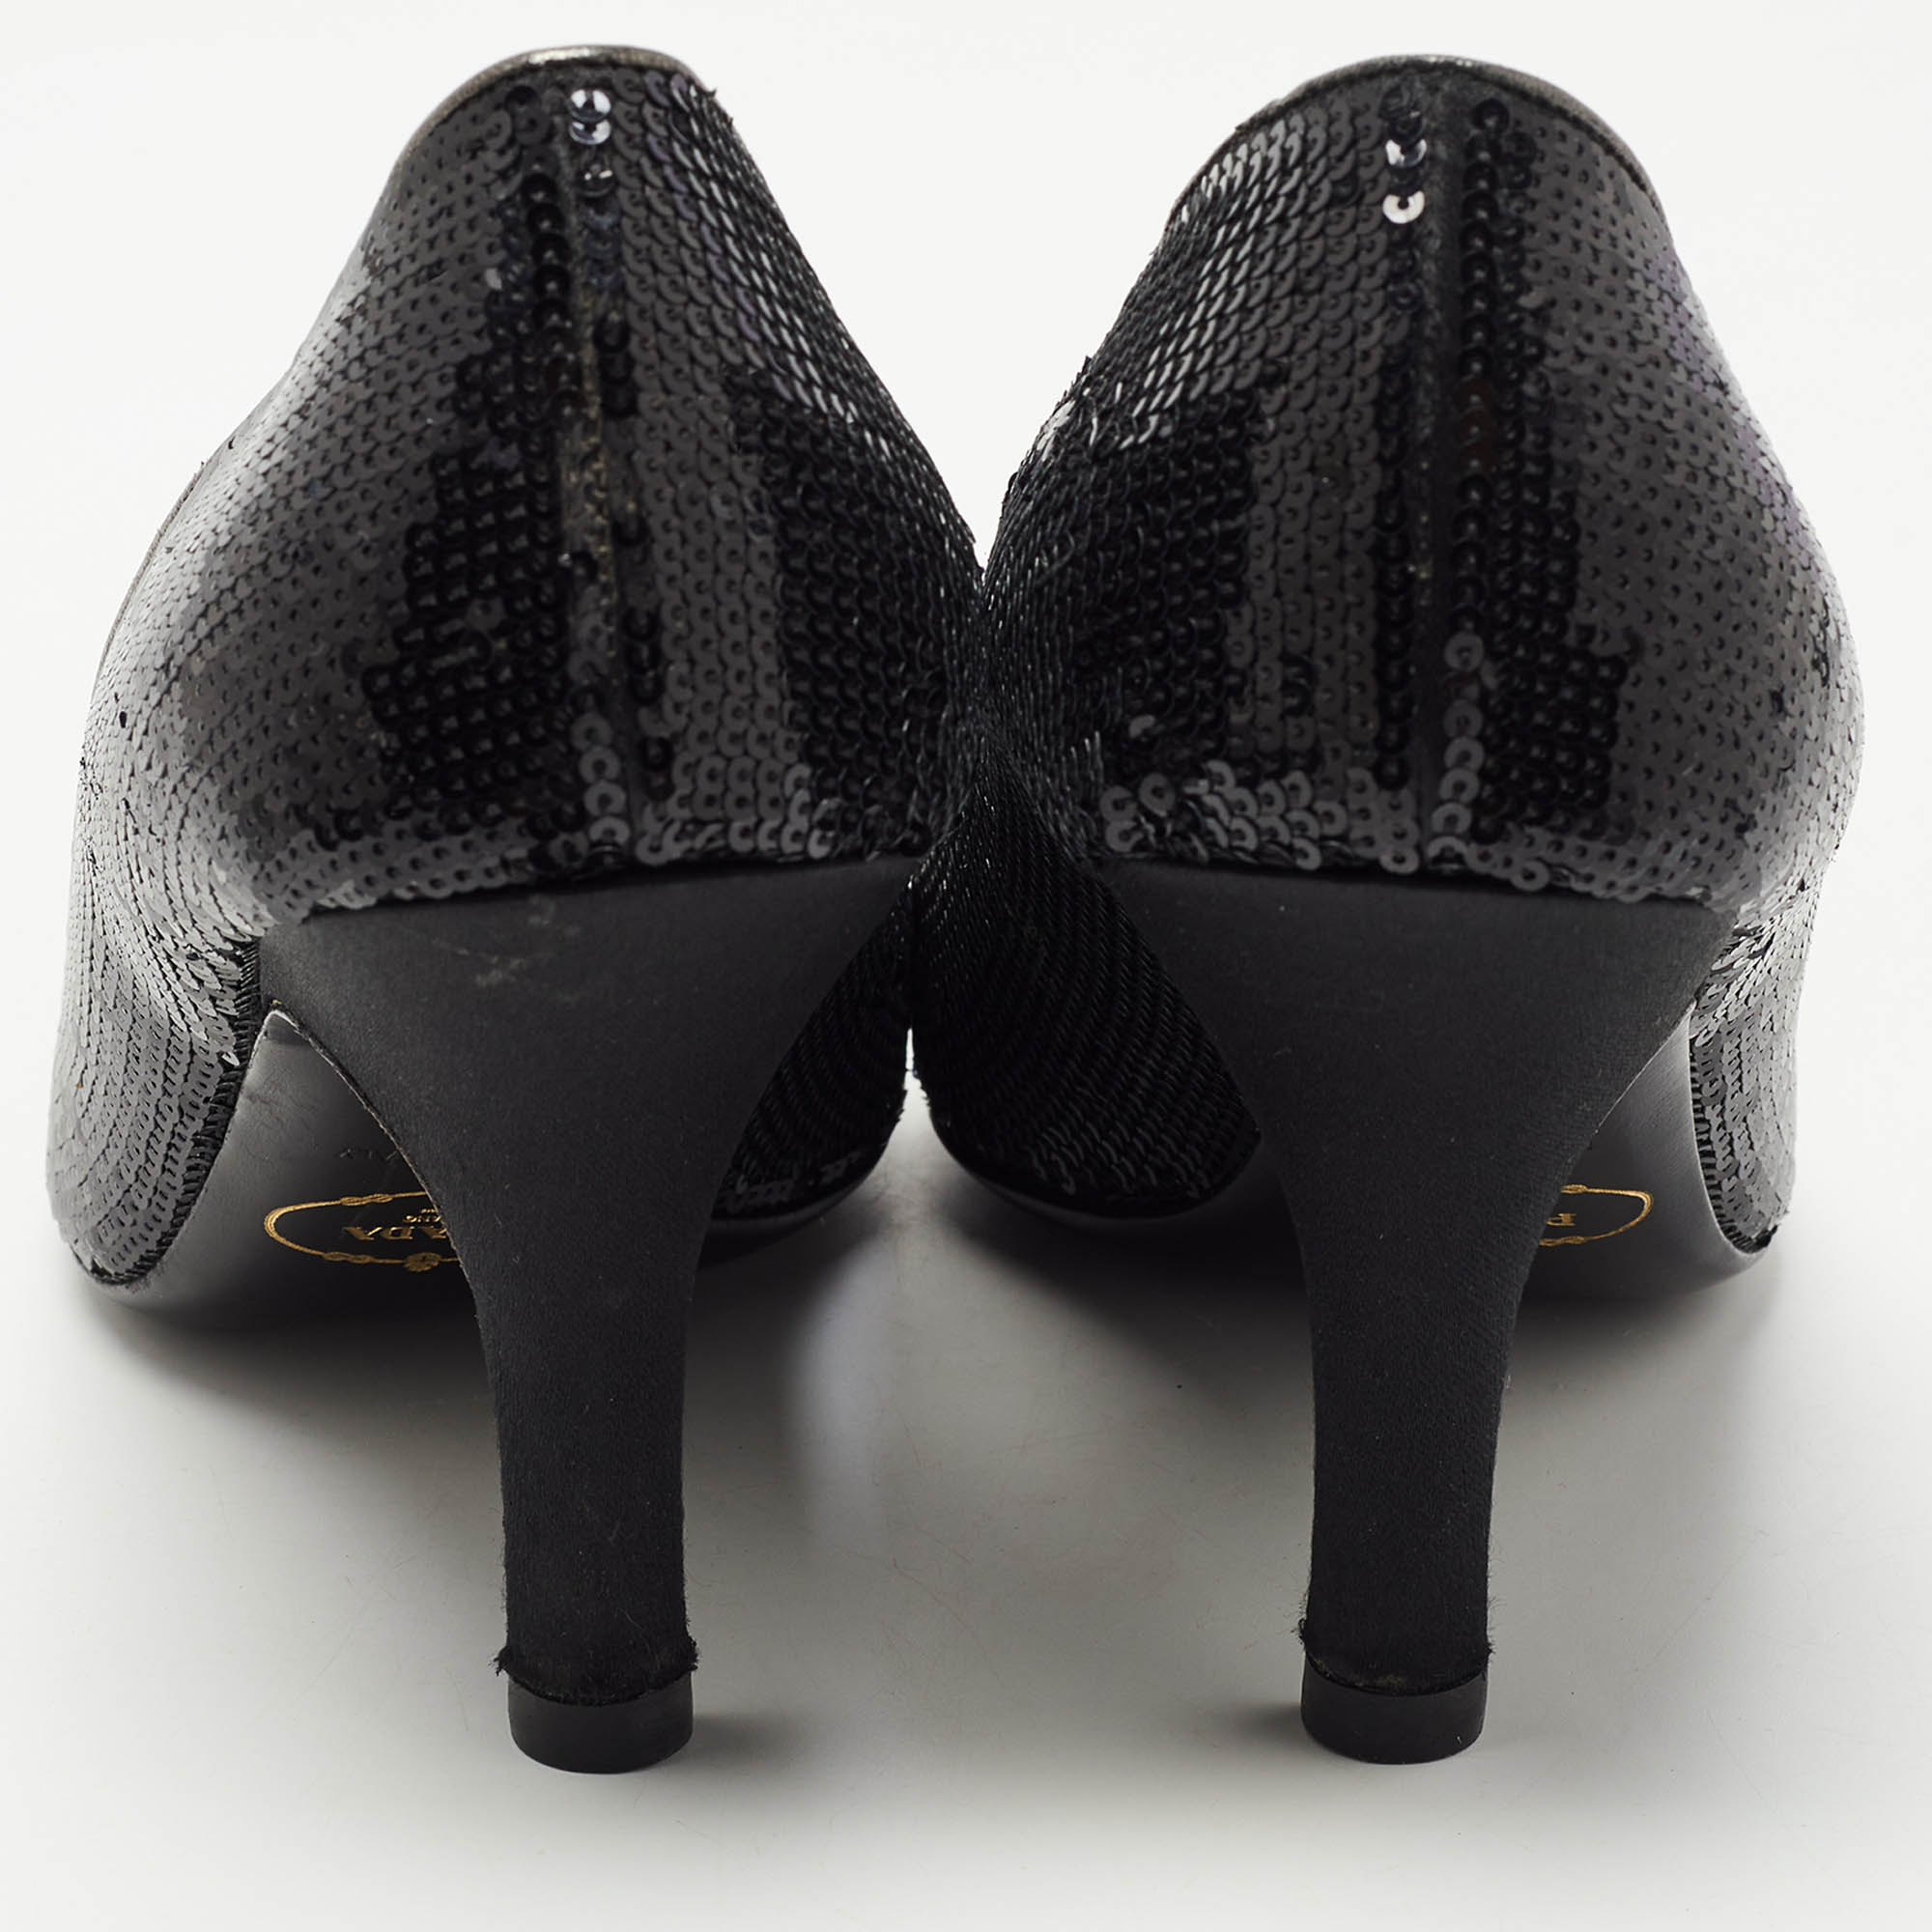 Prada Black Leather And Sequin Flower Embellished Peep Toe Pumps Size 40